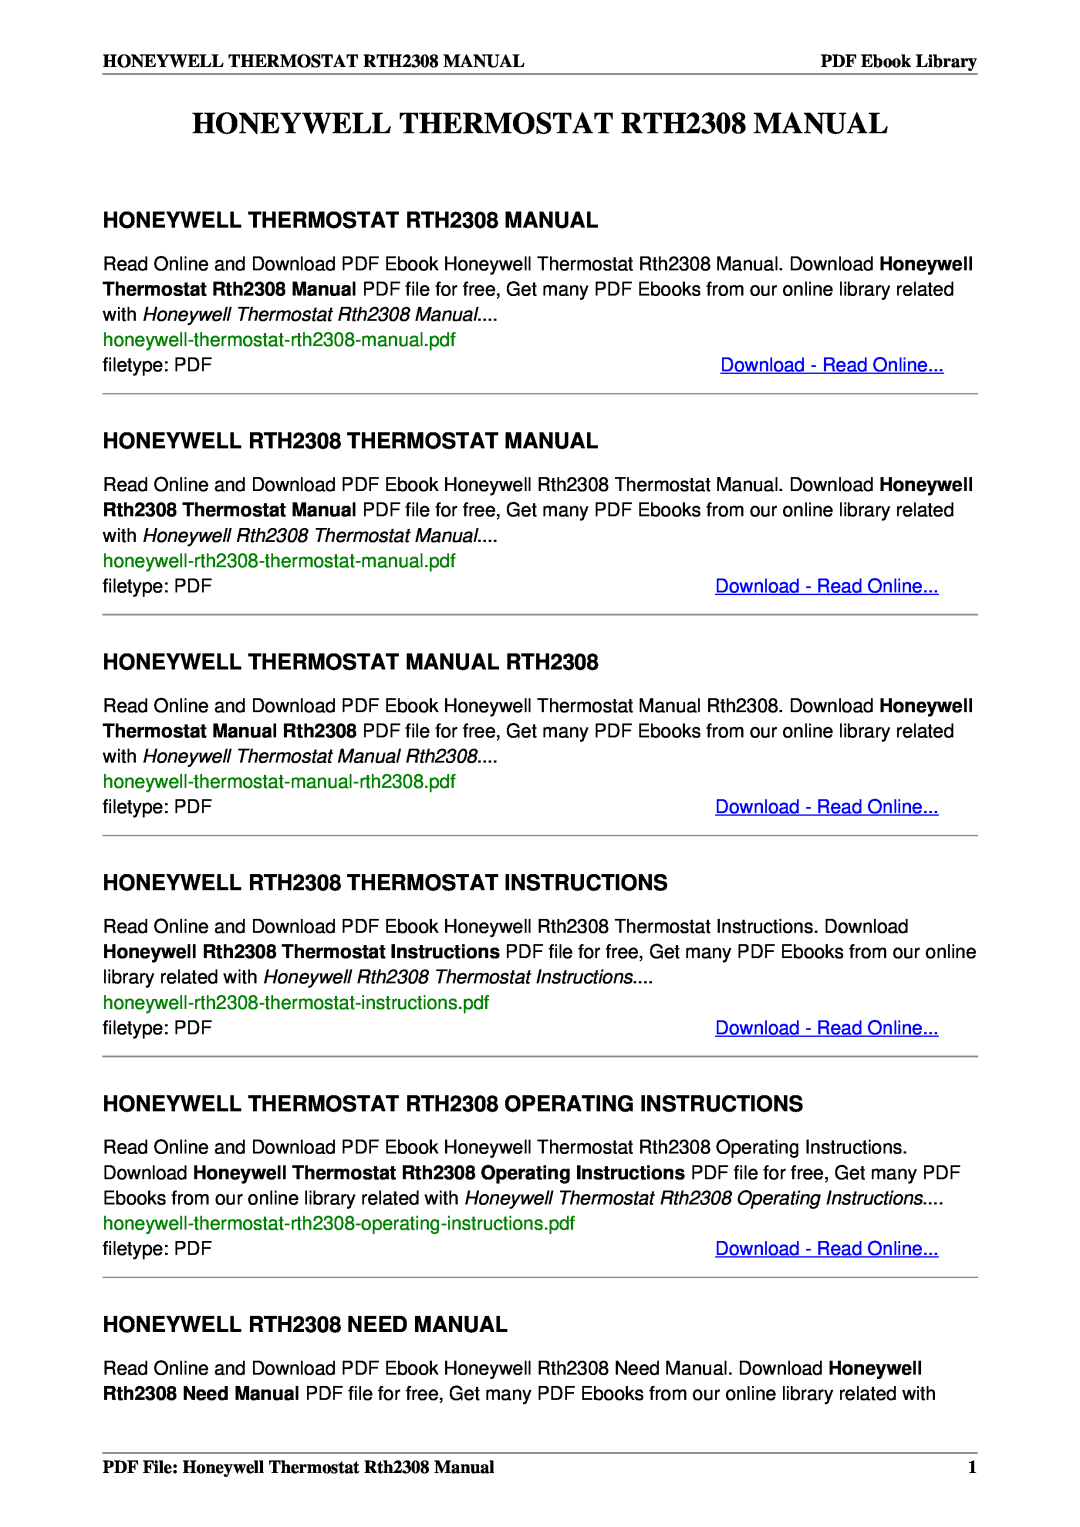 Honeywell manual HONEYWELL THERMOSTAT RTH2308 MANUAL, HONEYWELL RTH2308 THERMOSTAT MANUAL, filetype PDF 